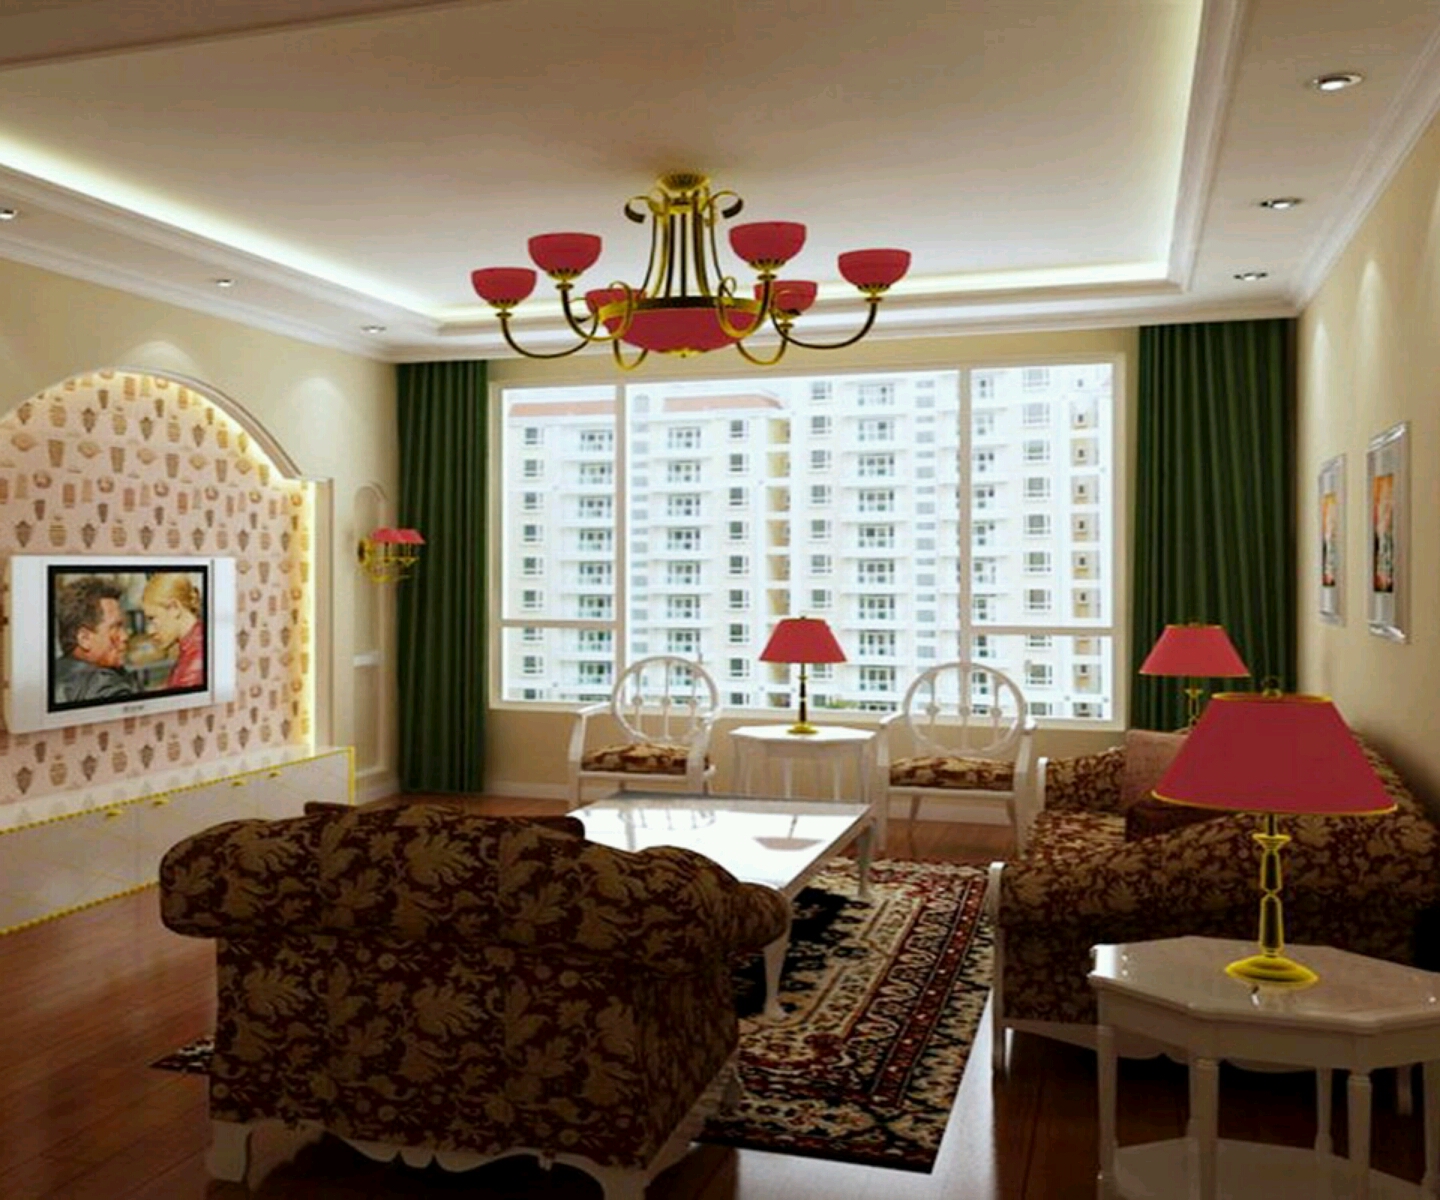 Luxury living rooms interior modern designs ideas. | Home ...